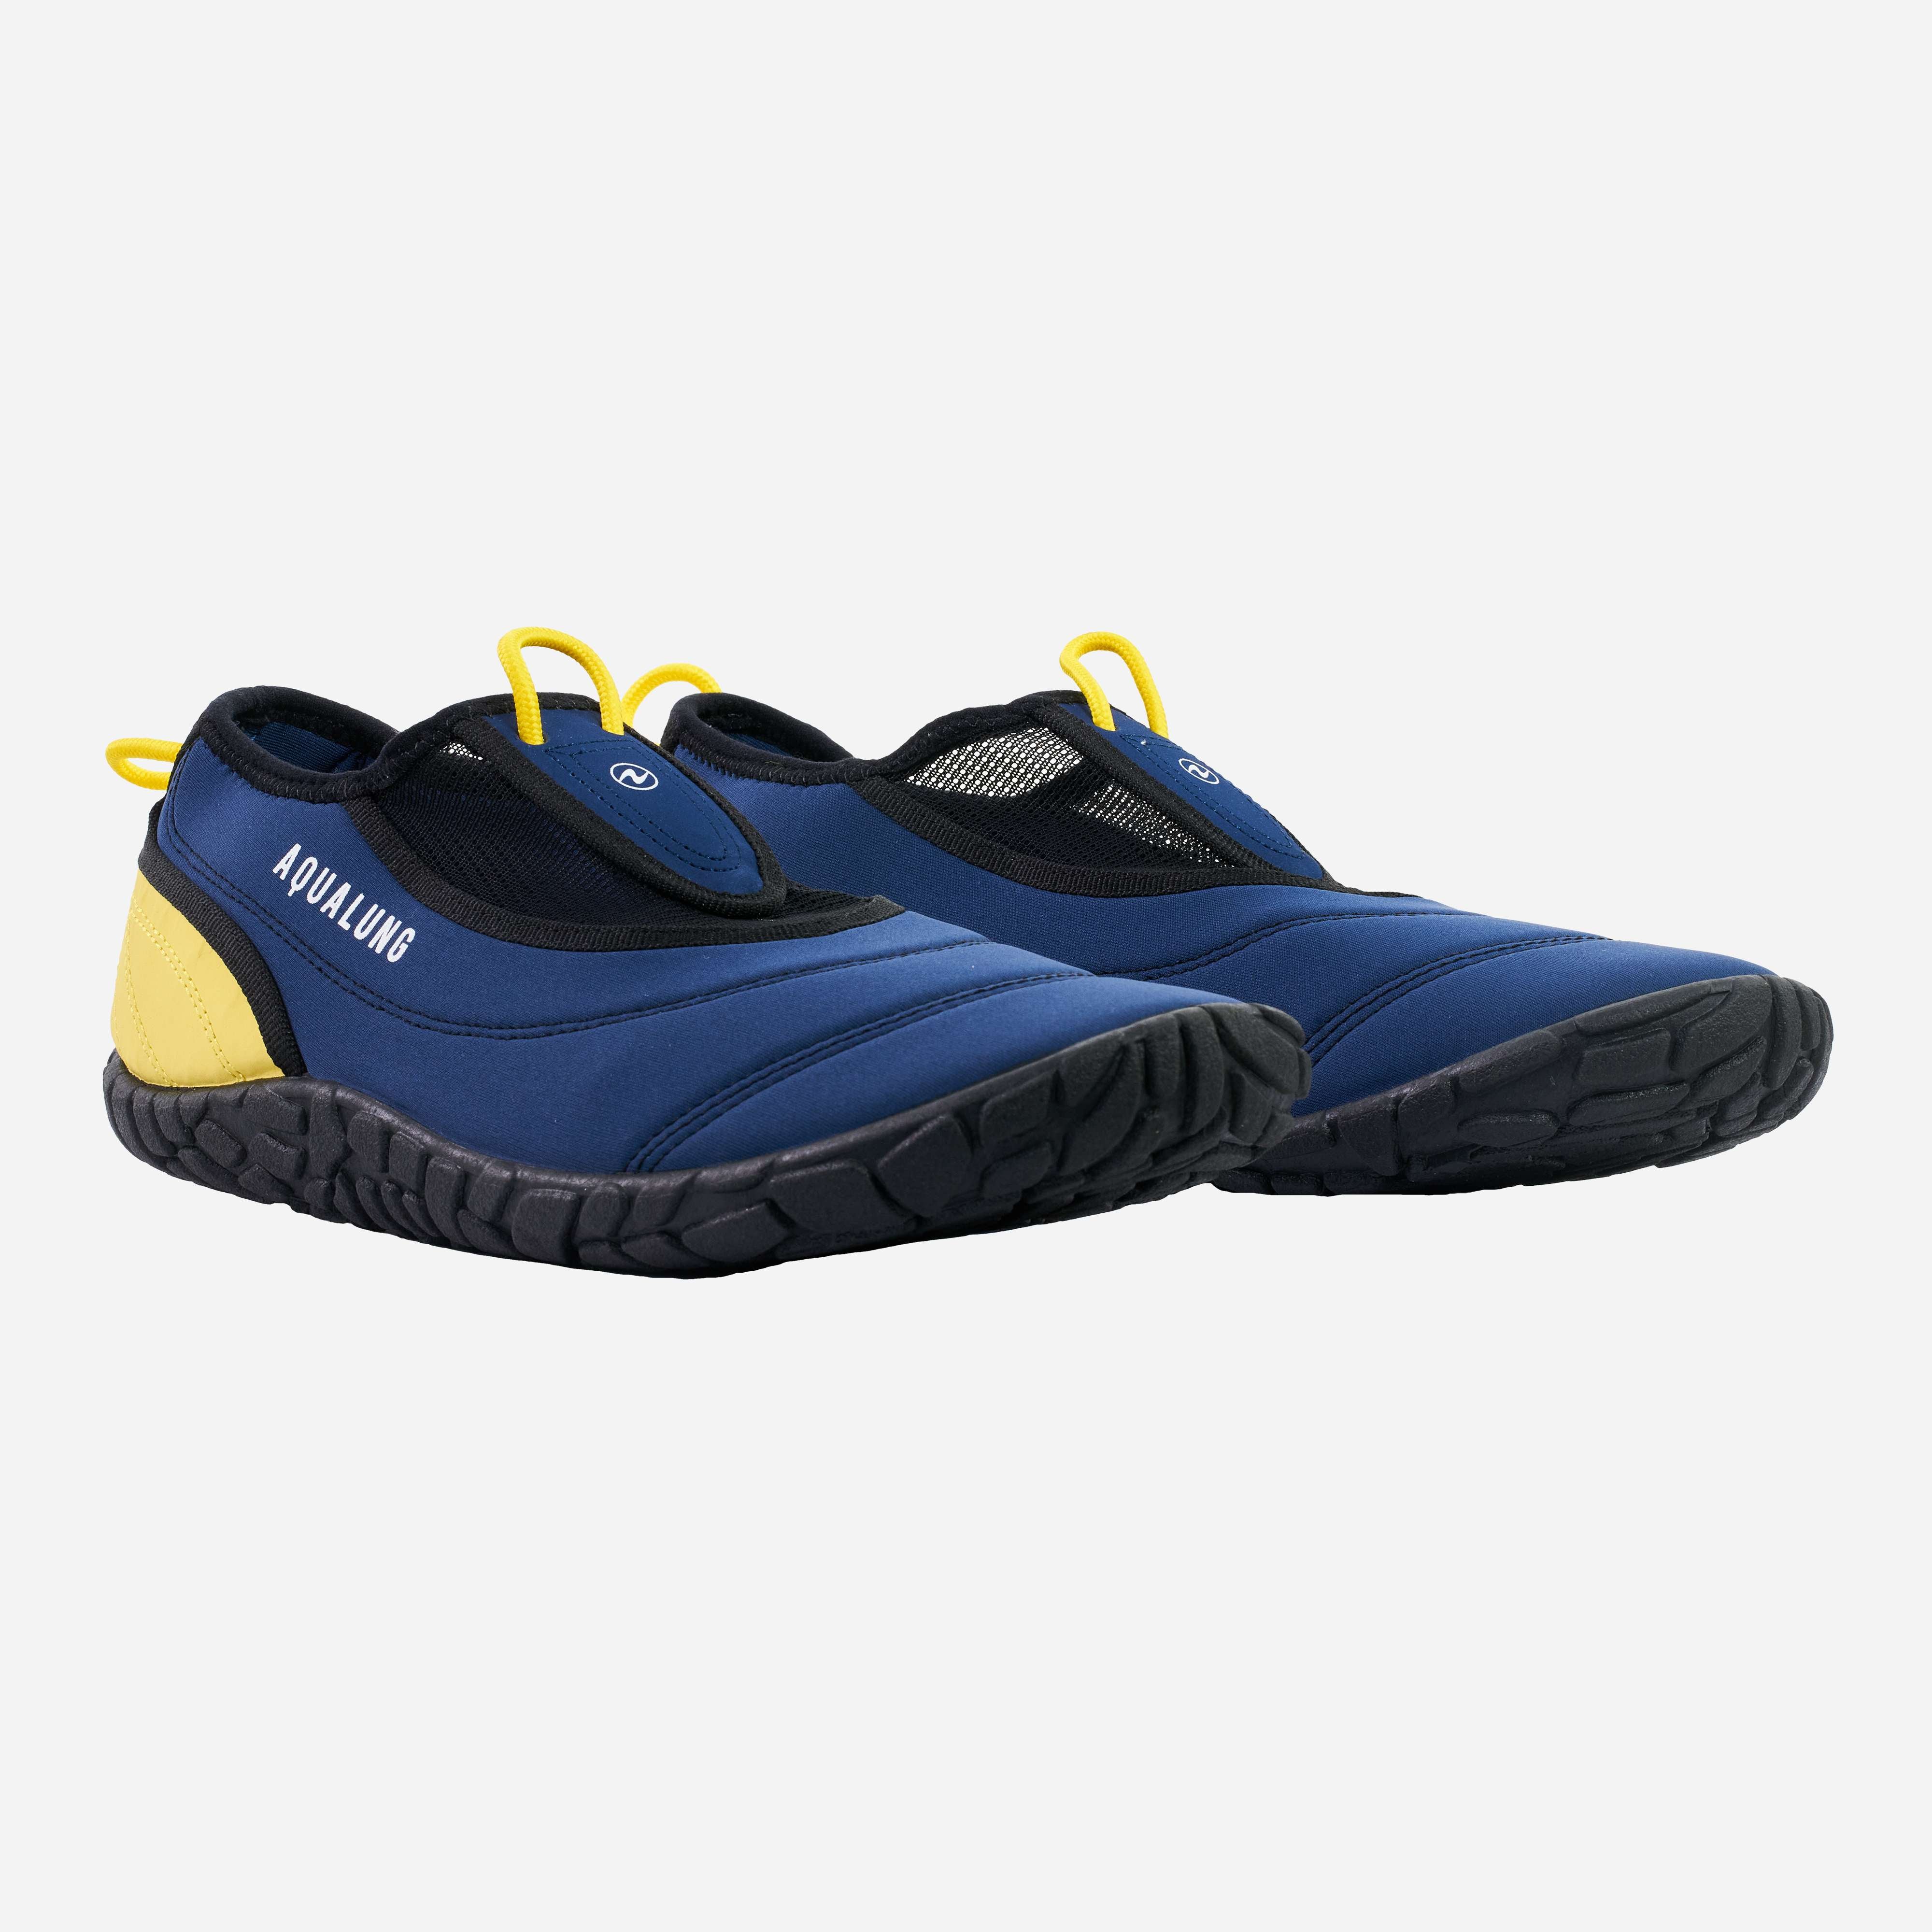 Beachwalker XP: Water shoes for snorkeling | Aqualung®